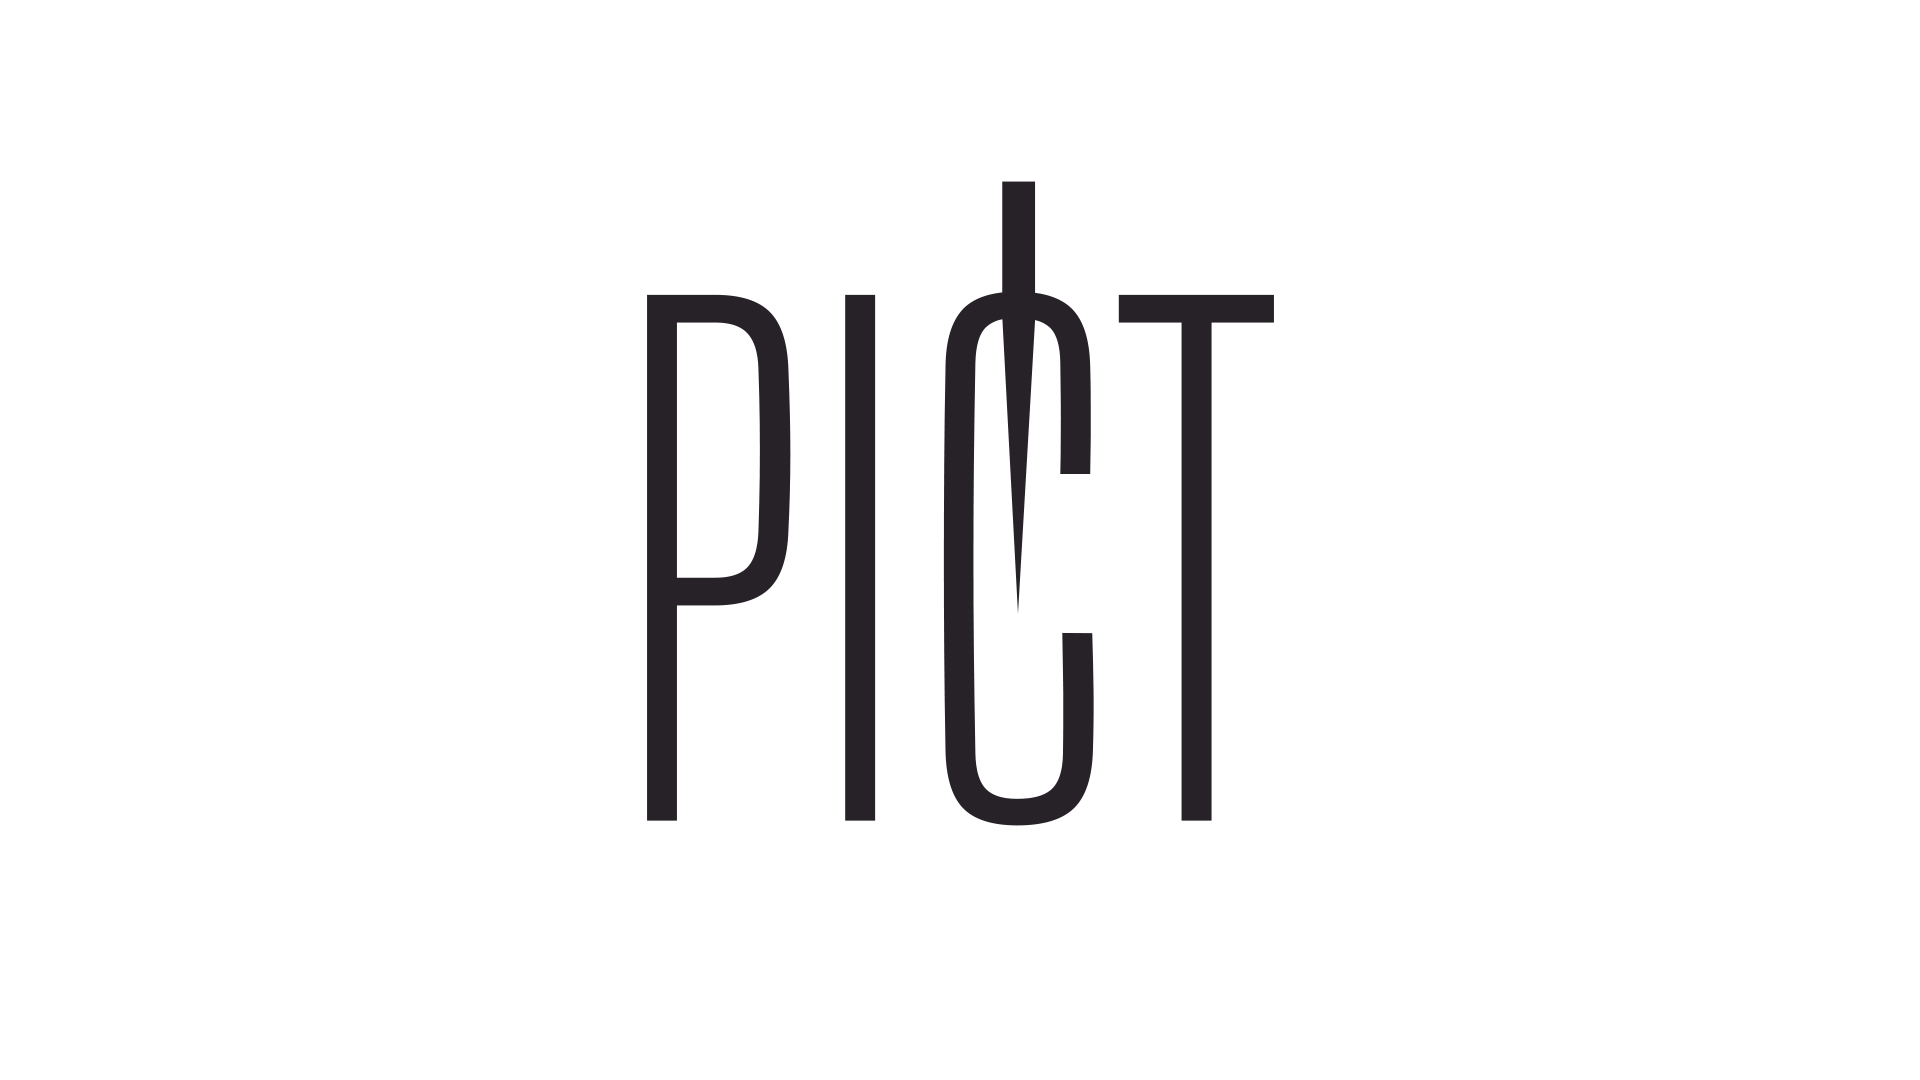 (c) Pictdigital.com